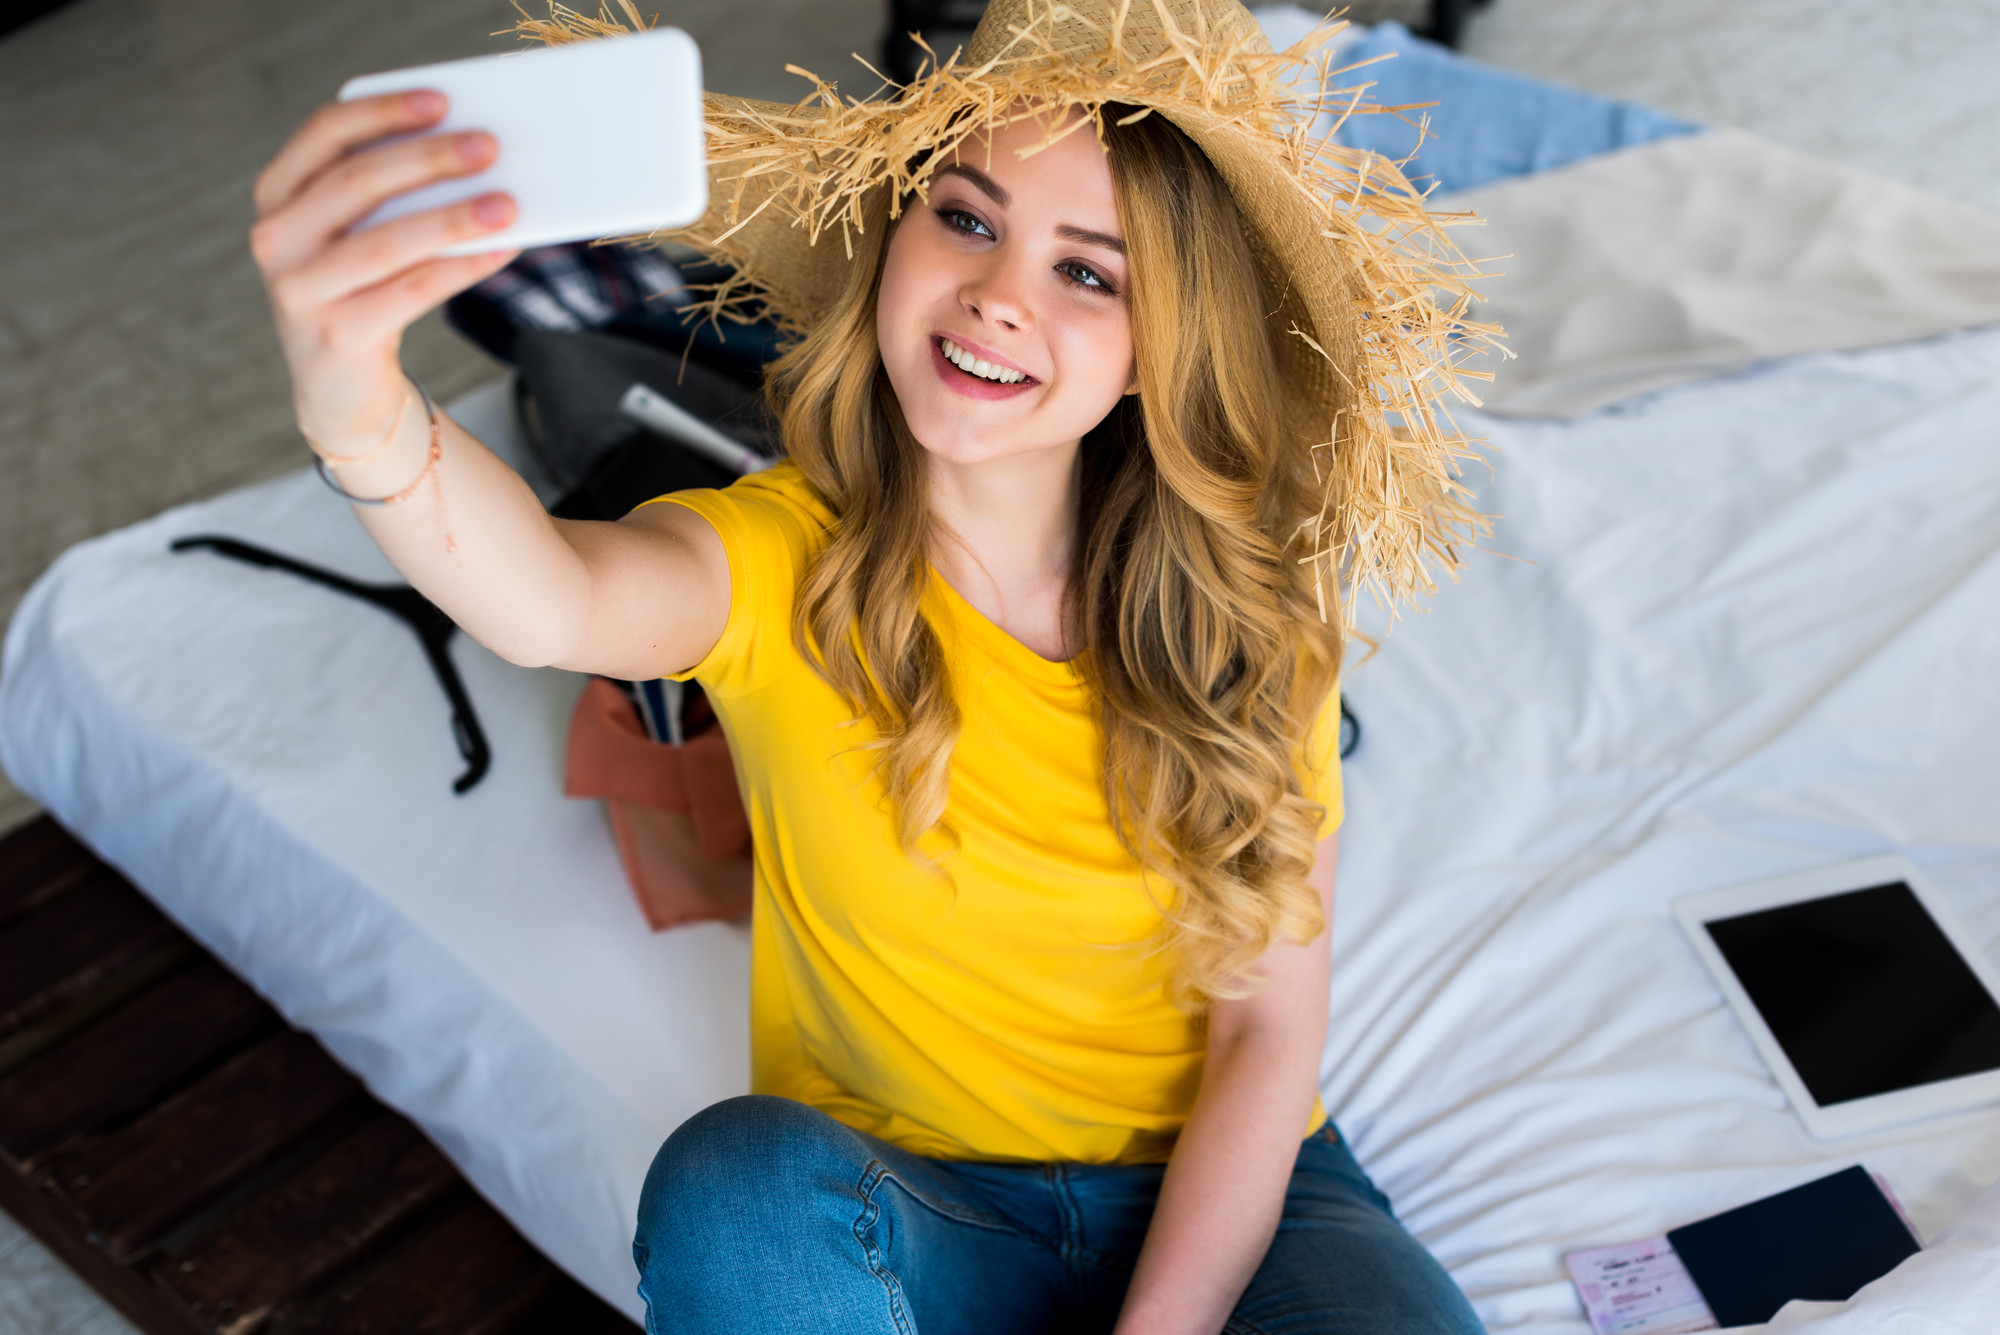 Girl taking selfie in hotel room.